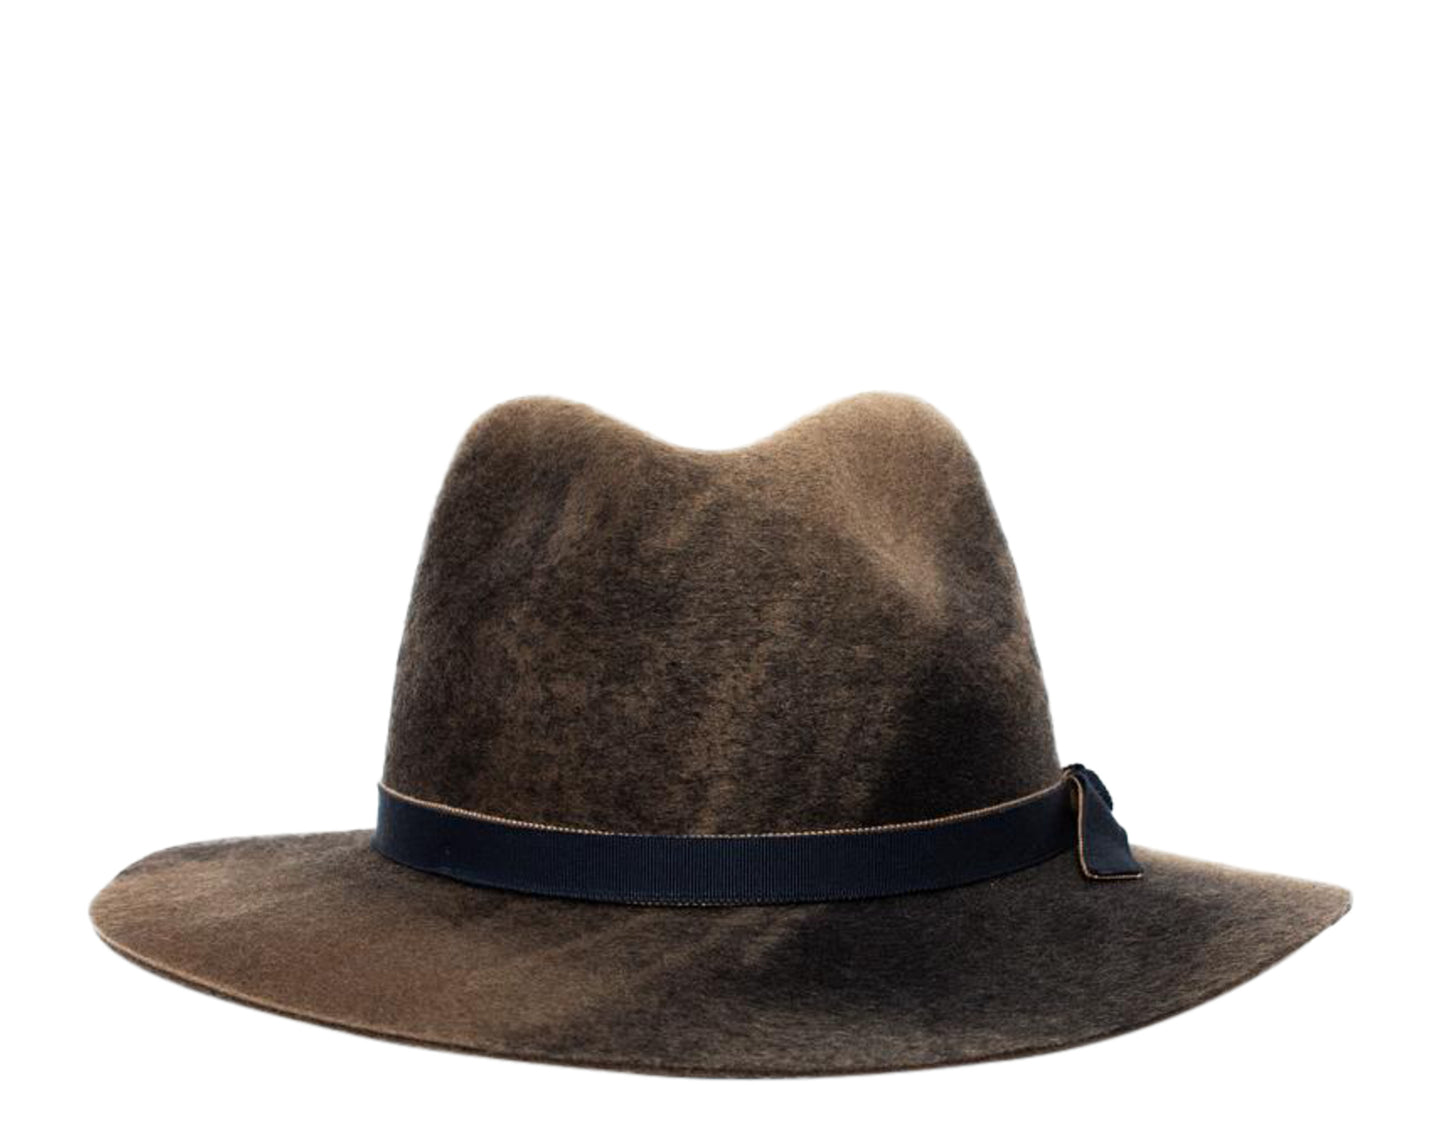 Goorin Bros Heritage Mishka Fedora Men's Hat